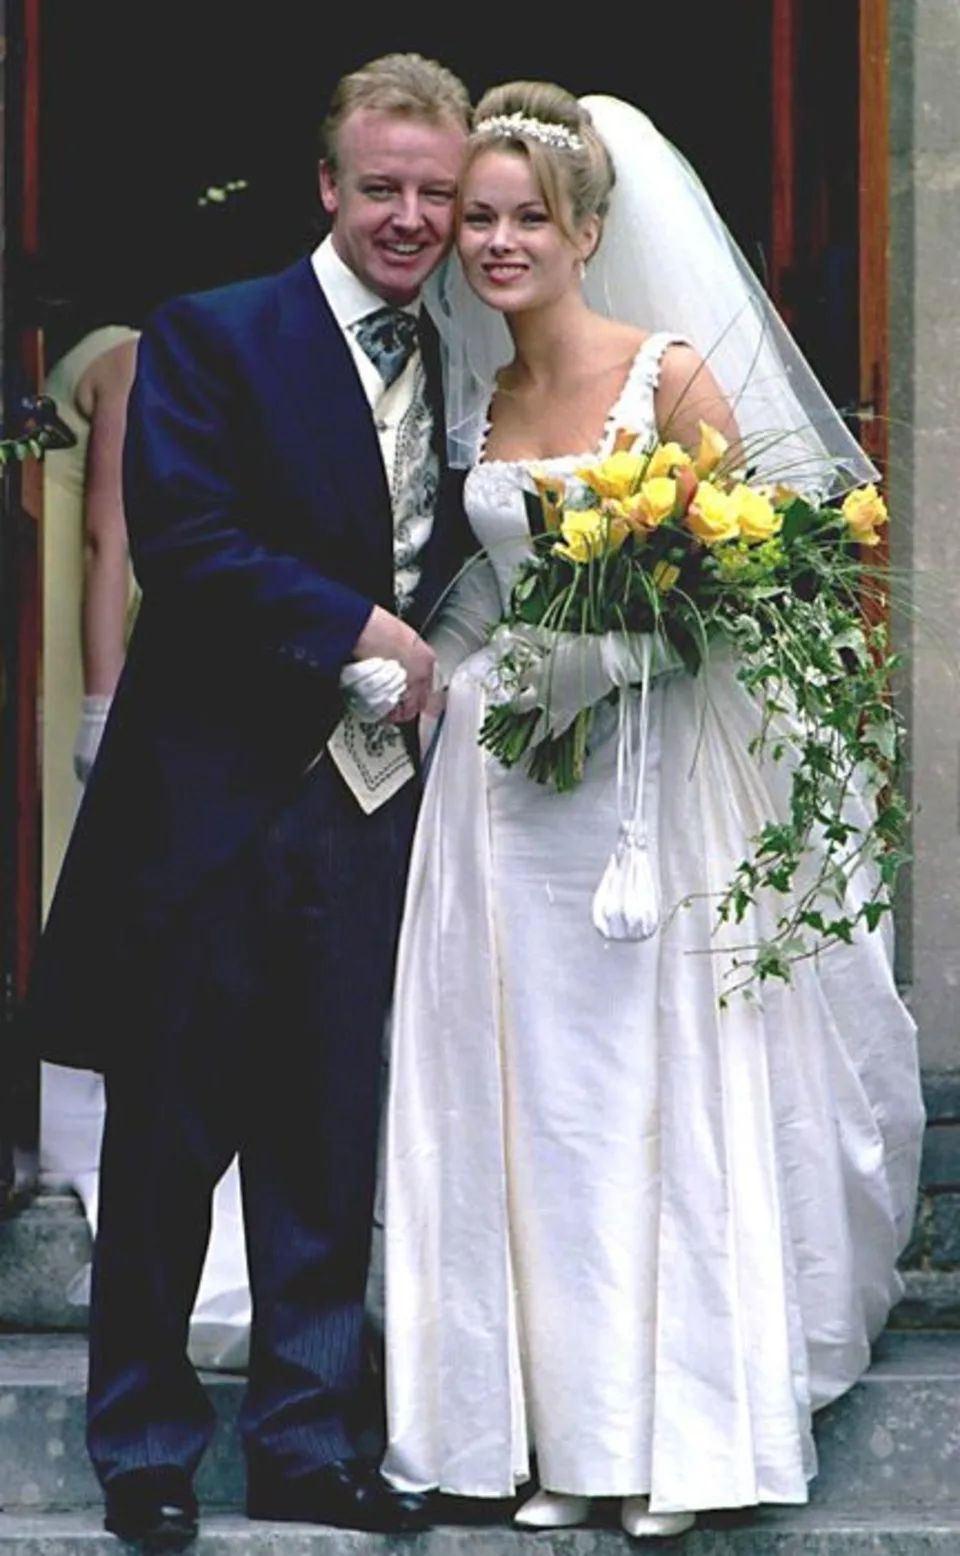 Amanda and Les divorced in 2003